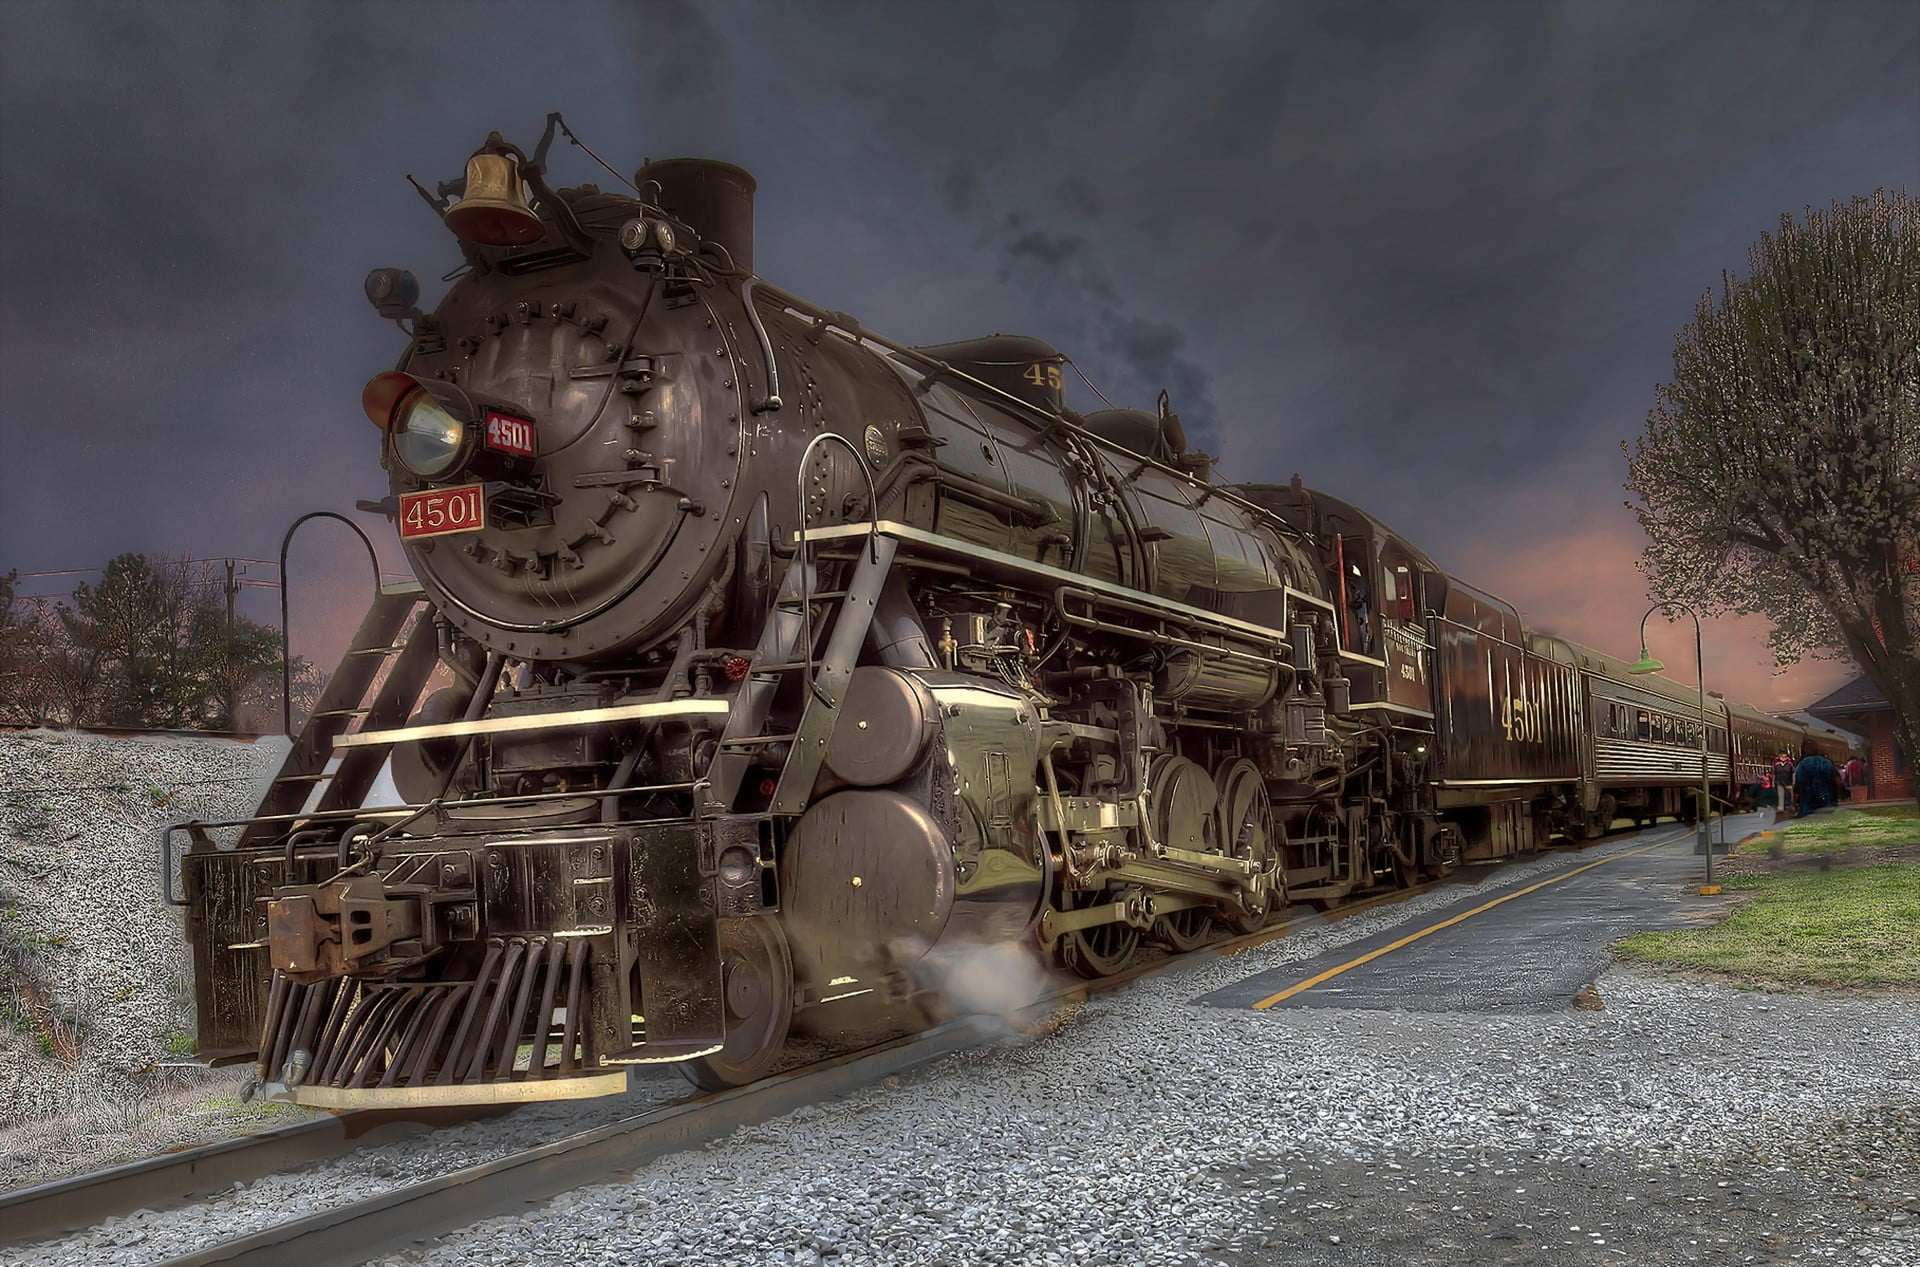 black train, vehicle, steam locomotive, nature, railway